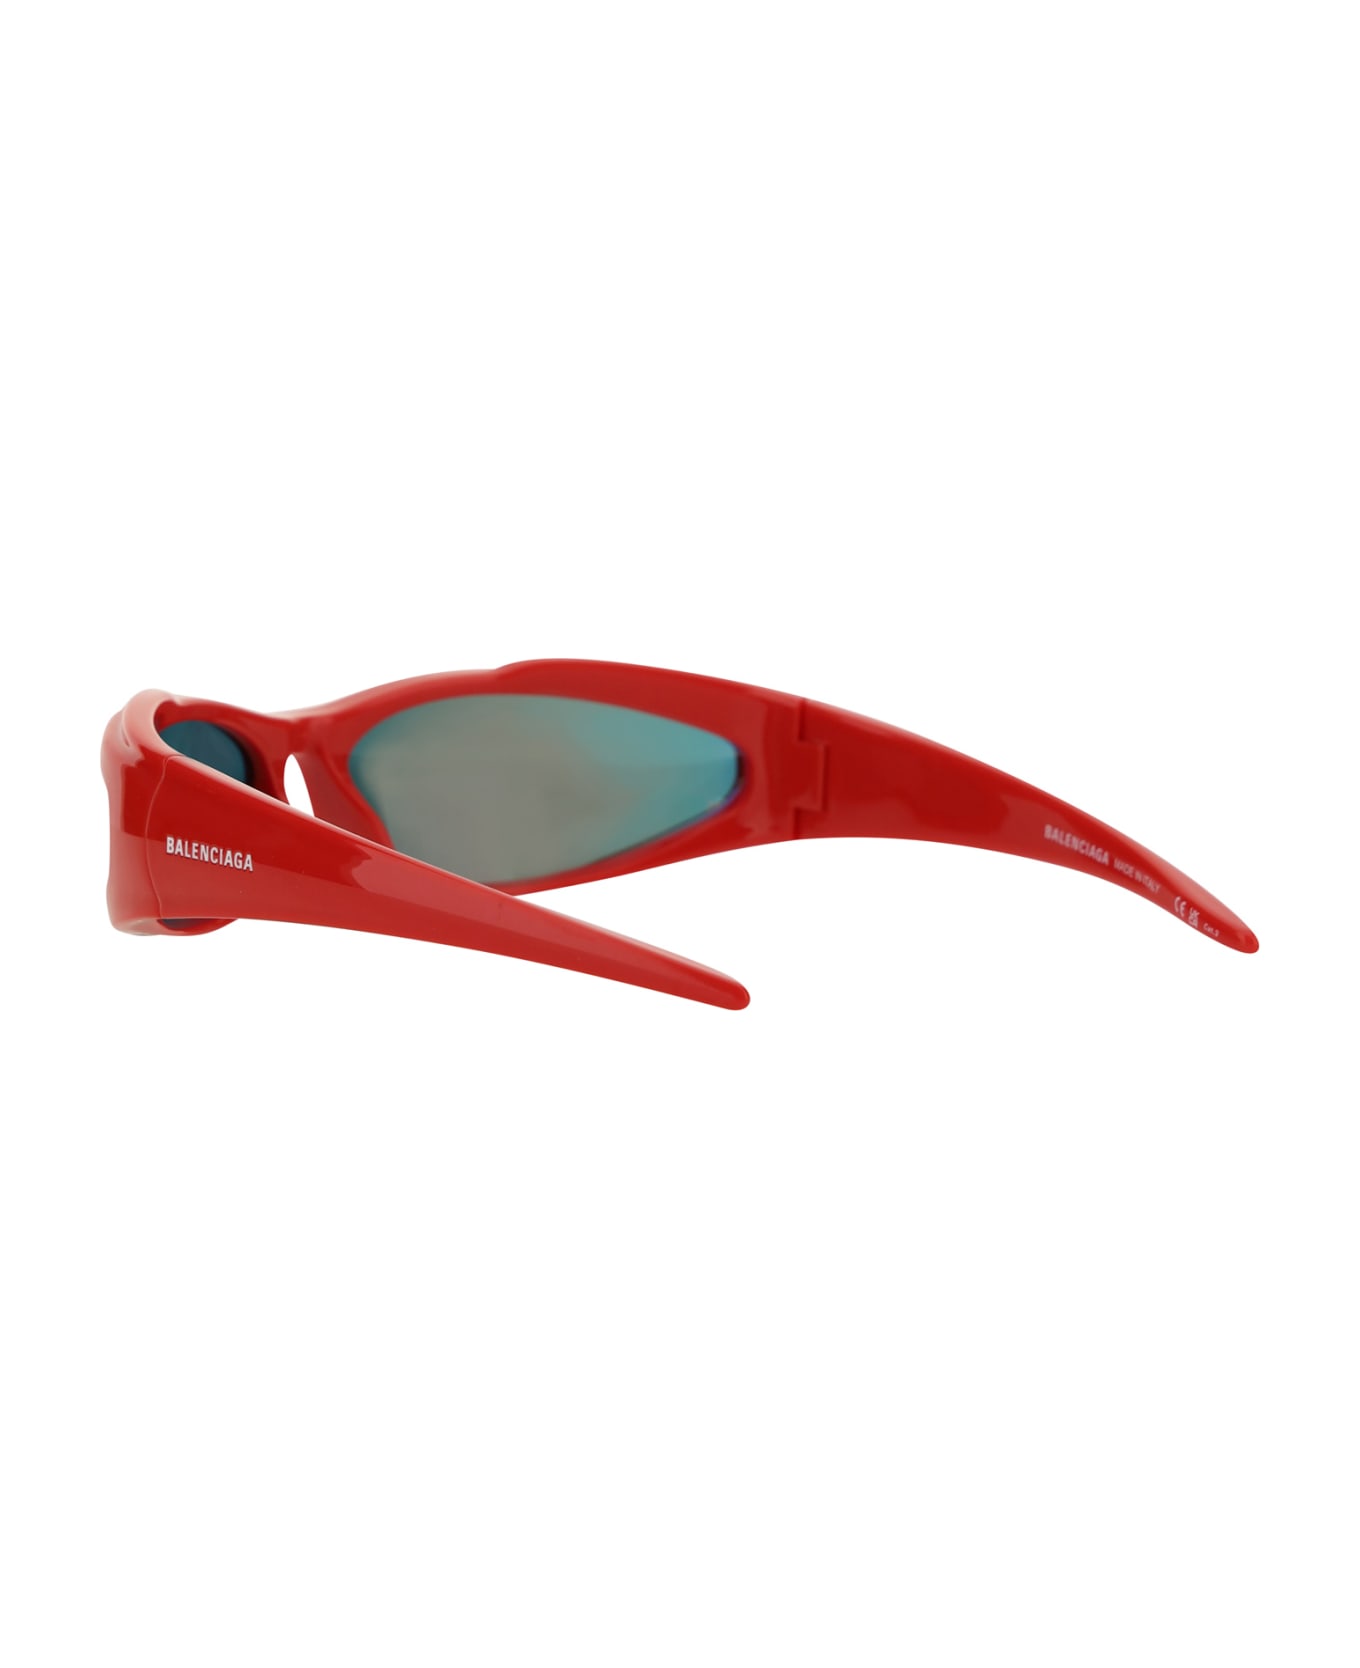 Balenciaga Eyewear Reverse Xpander Rectangle Sunglasses - Red/mirrorred